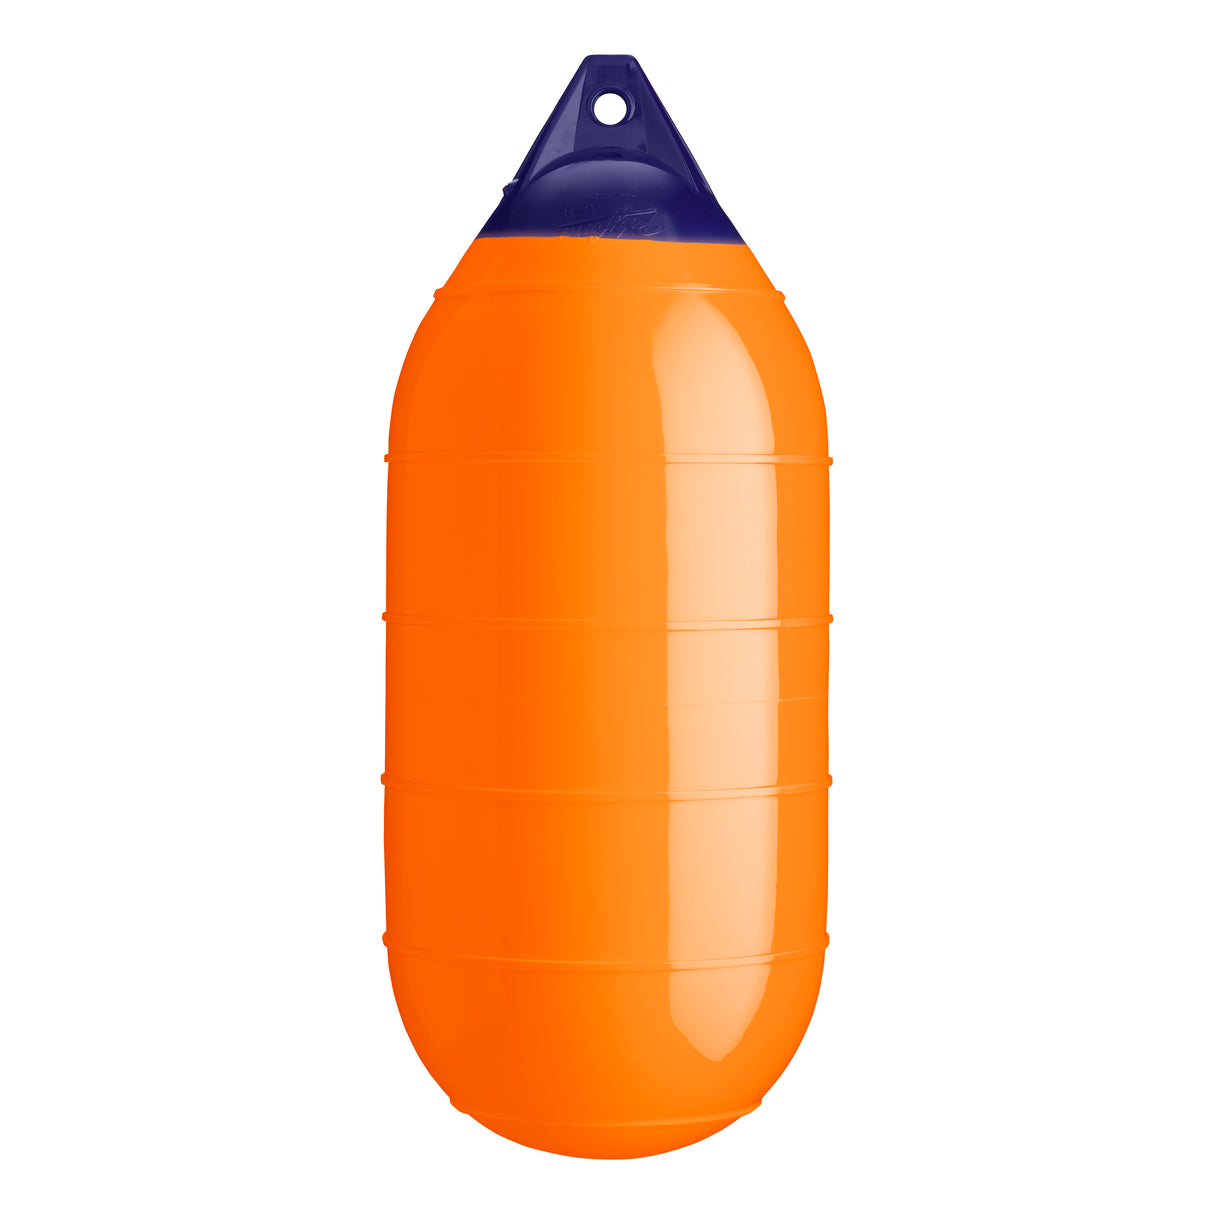 Orange inflatable low drag buoy, Polyform LD-4 